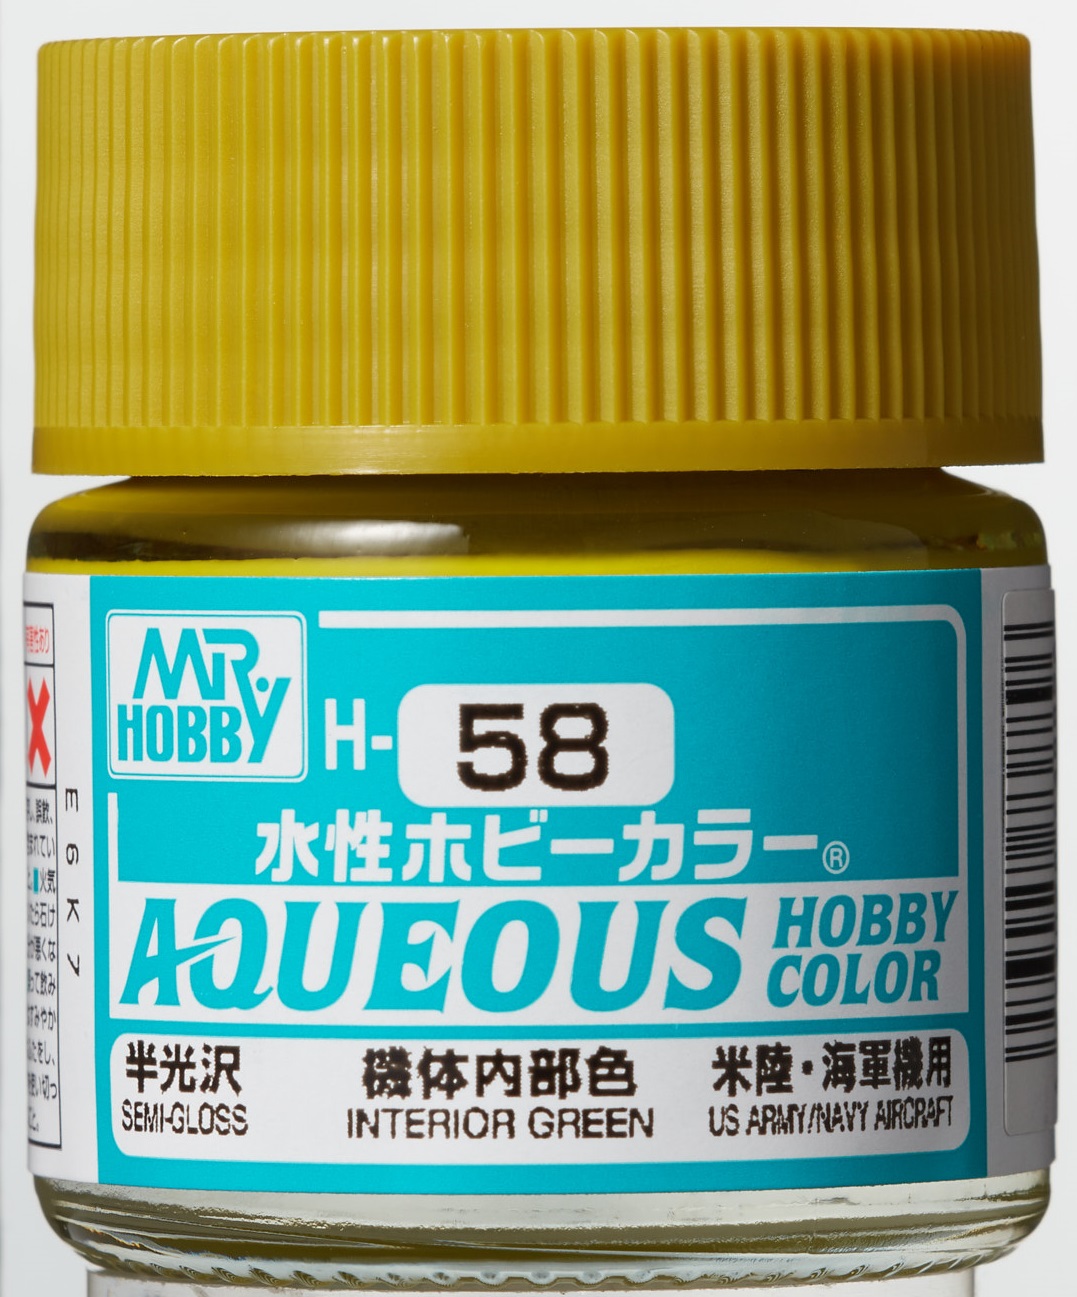 Mr. Aqueous Hobby Color - Interior Green - H58 - Interior Grün